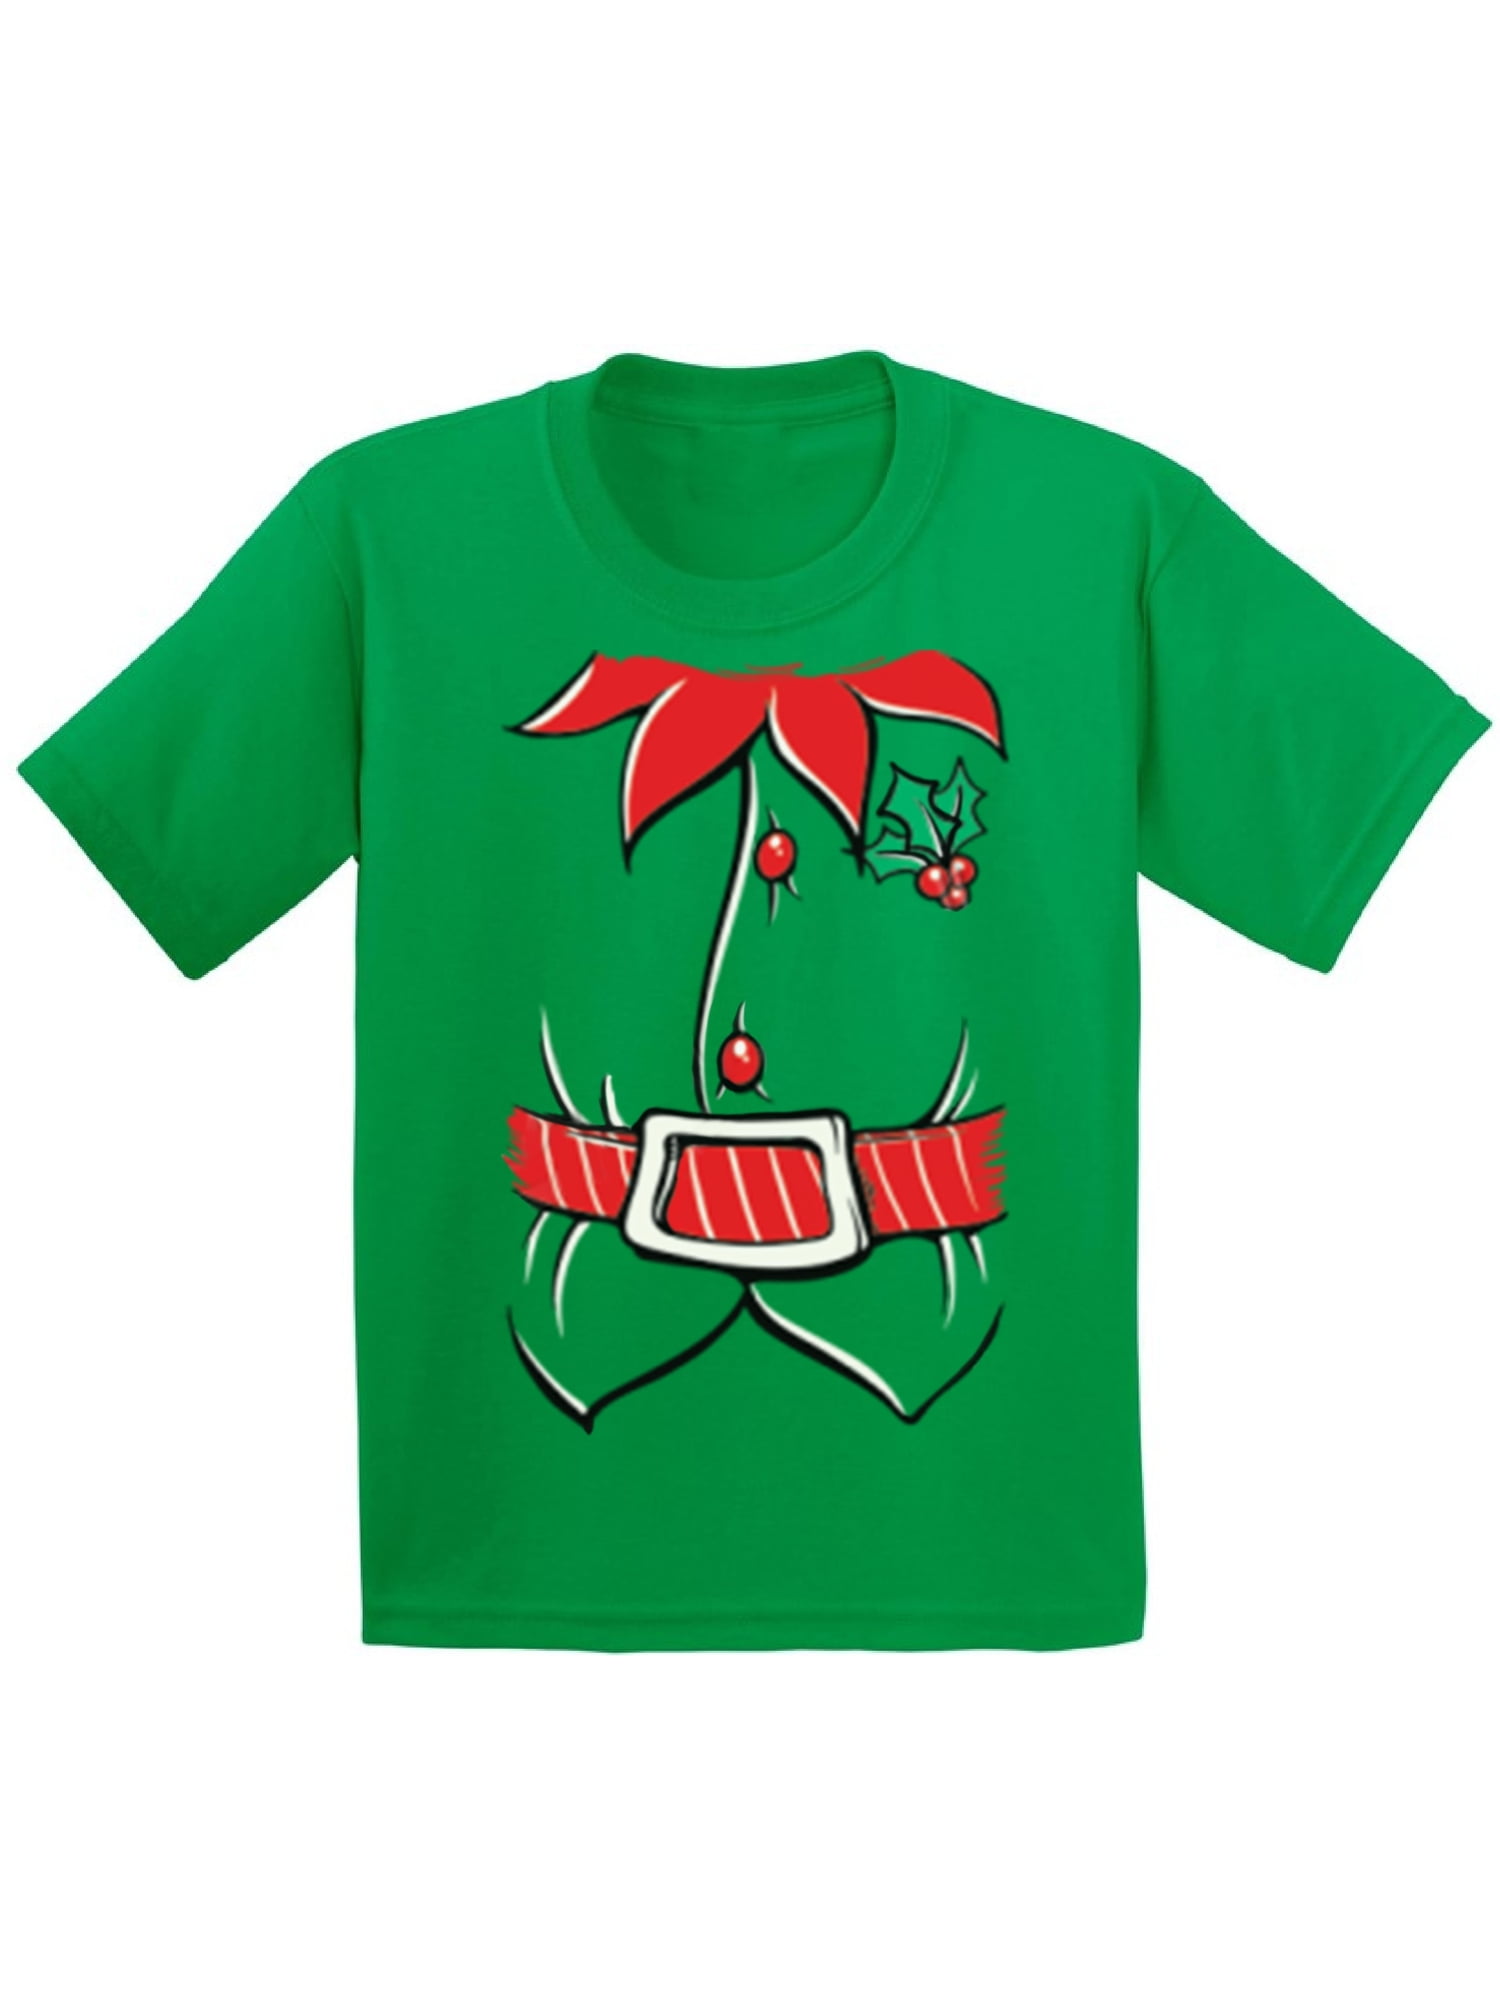 Christmas Santa shirt women\u2019s shirt  girls shirt  raglan shirt family Christmas shirt  holiday shirt unisex fit